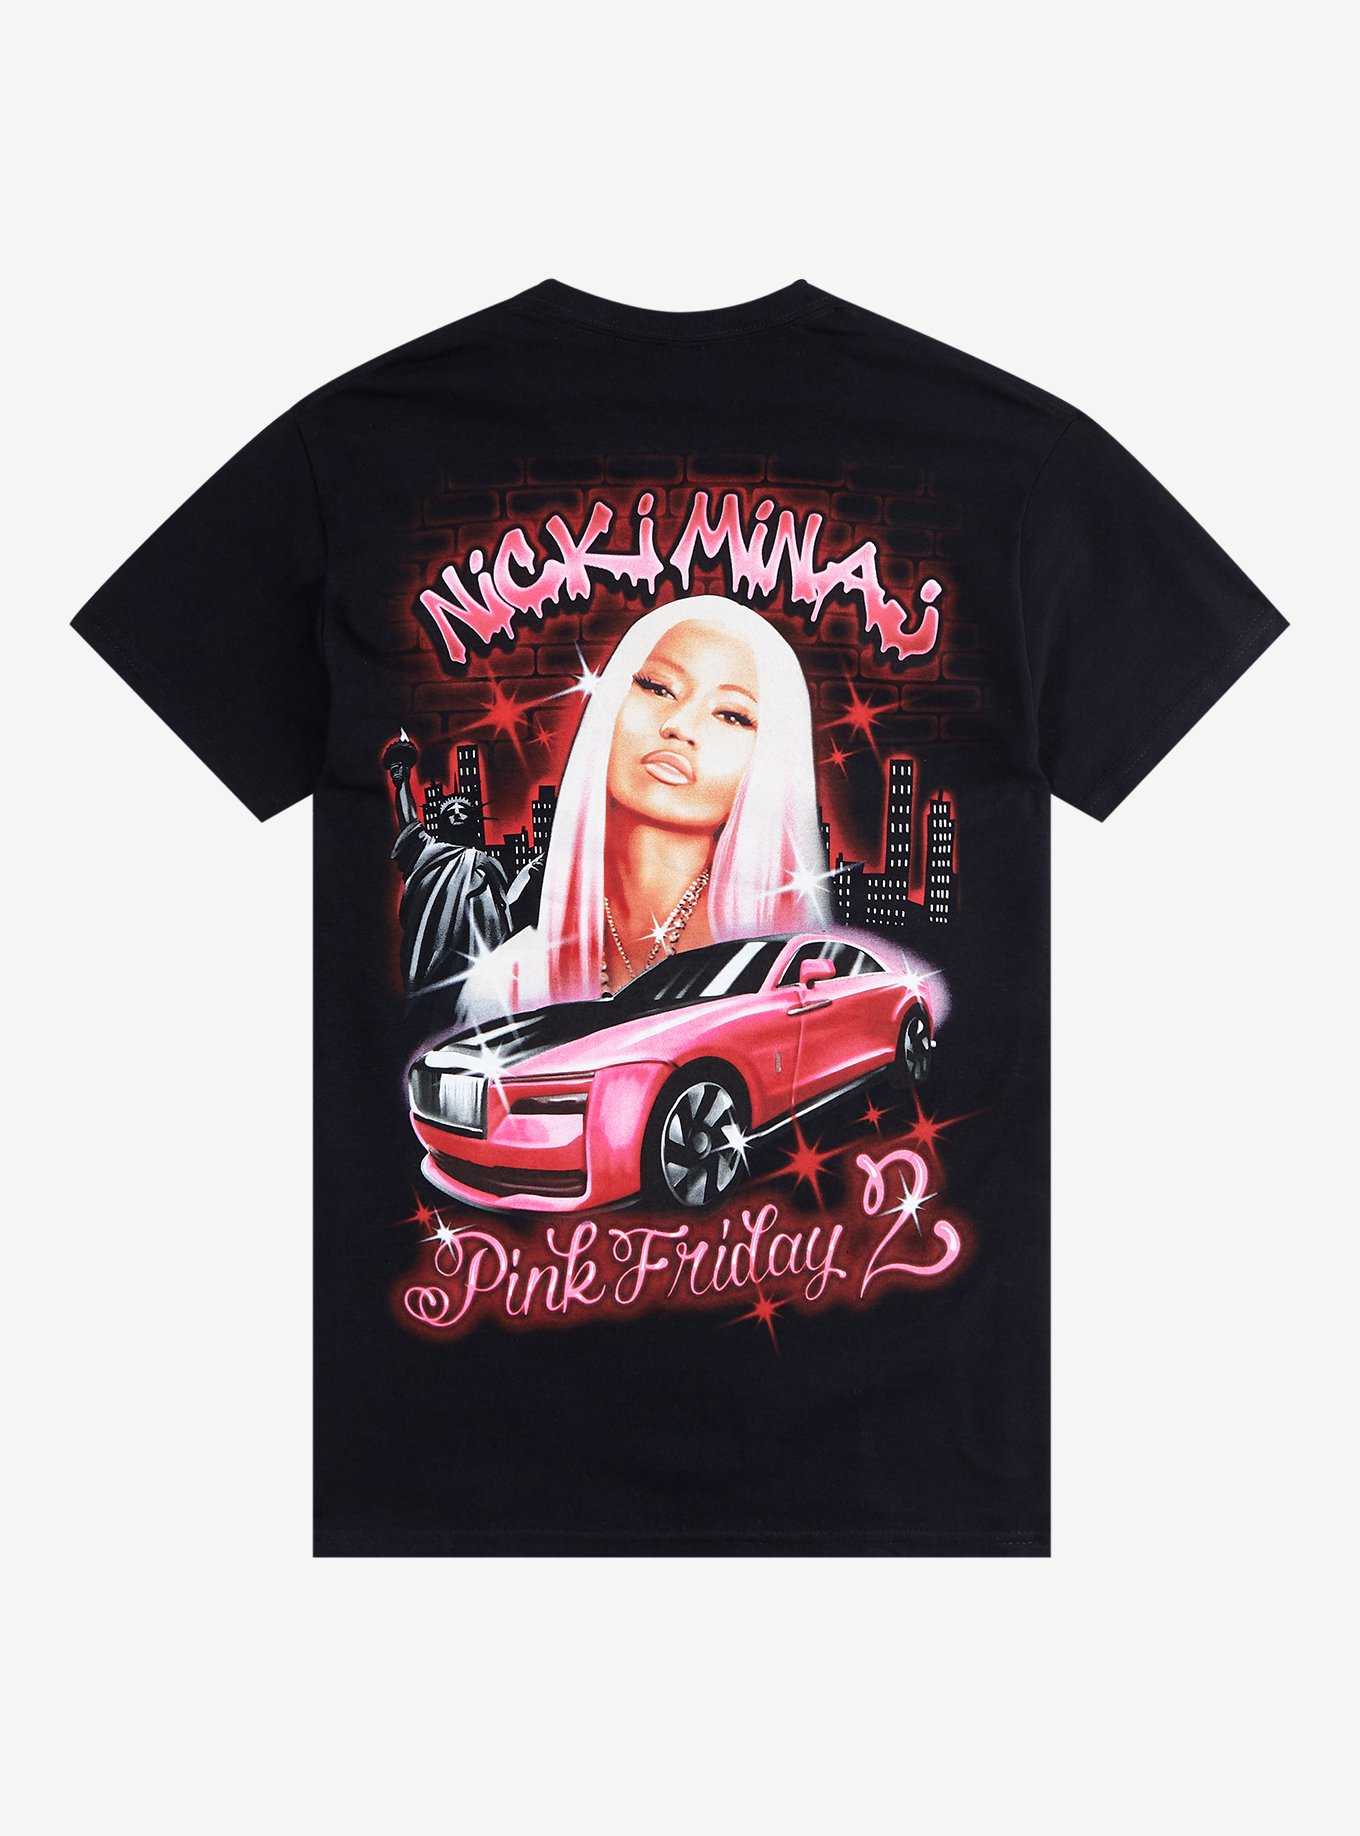 Nicki Minaj Pink Friday 2 Two-Sided Boyfriend Fit Girls T-Shirt, , hi-res